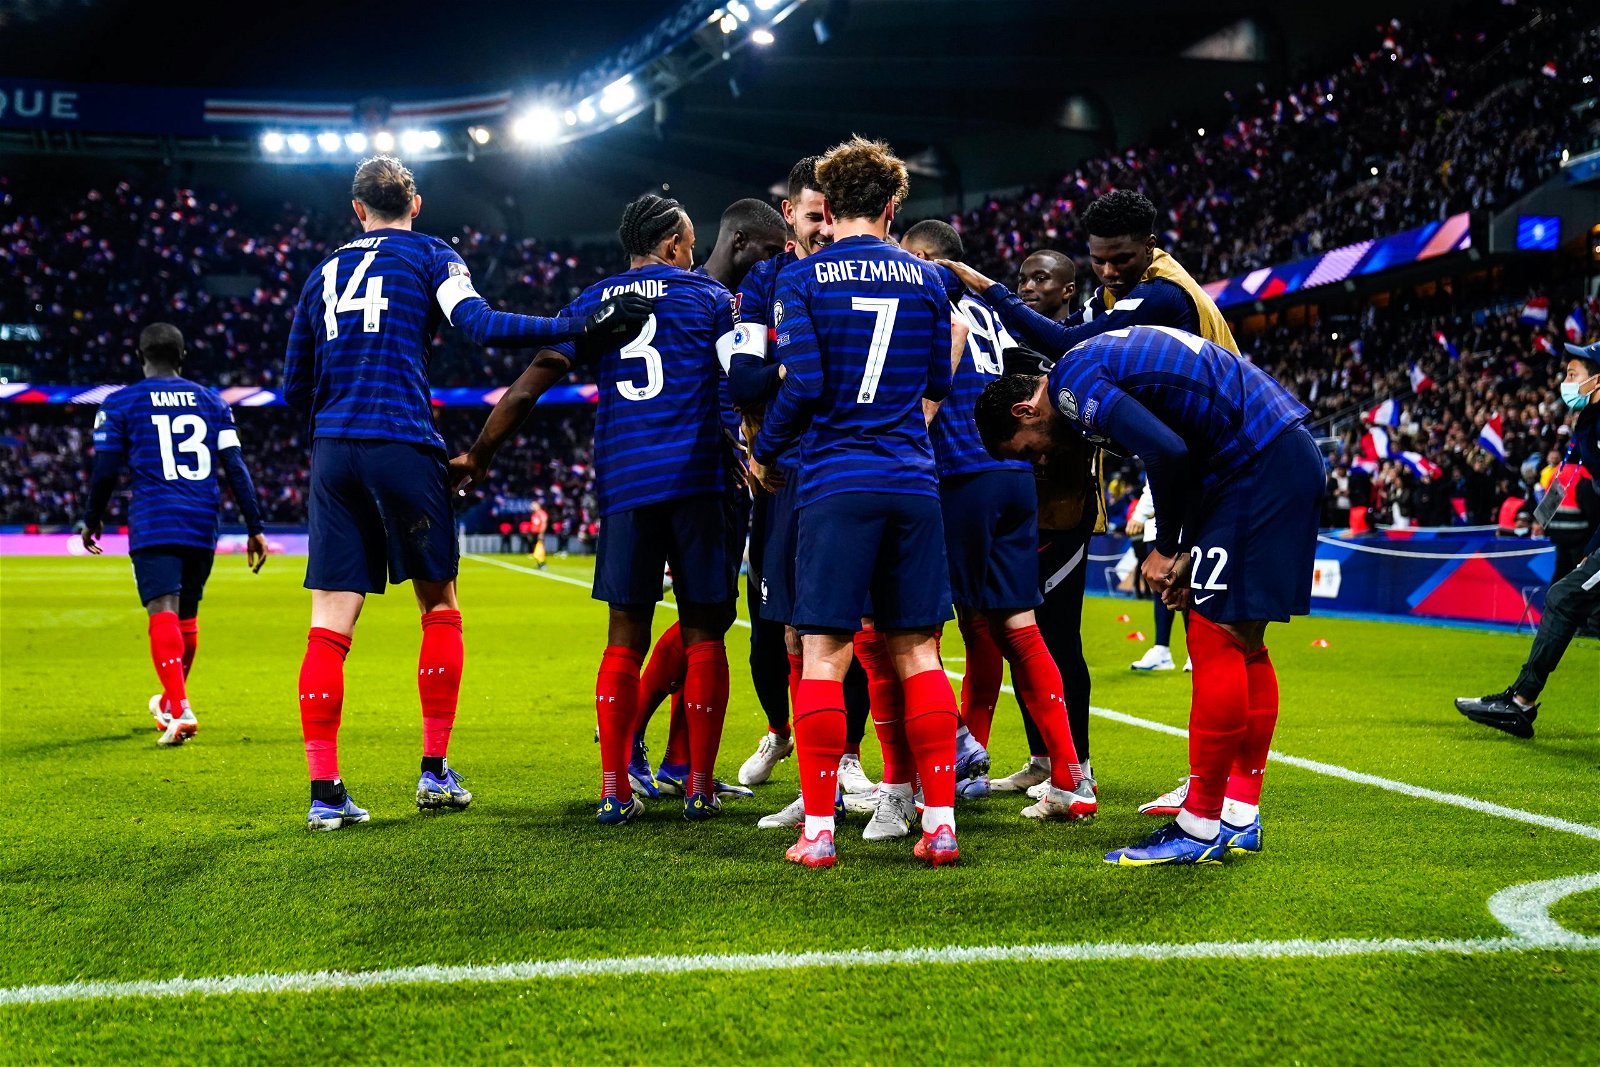 France vs Australia Predicted Starting Lineup